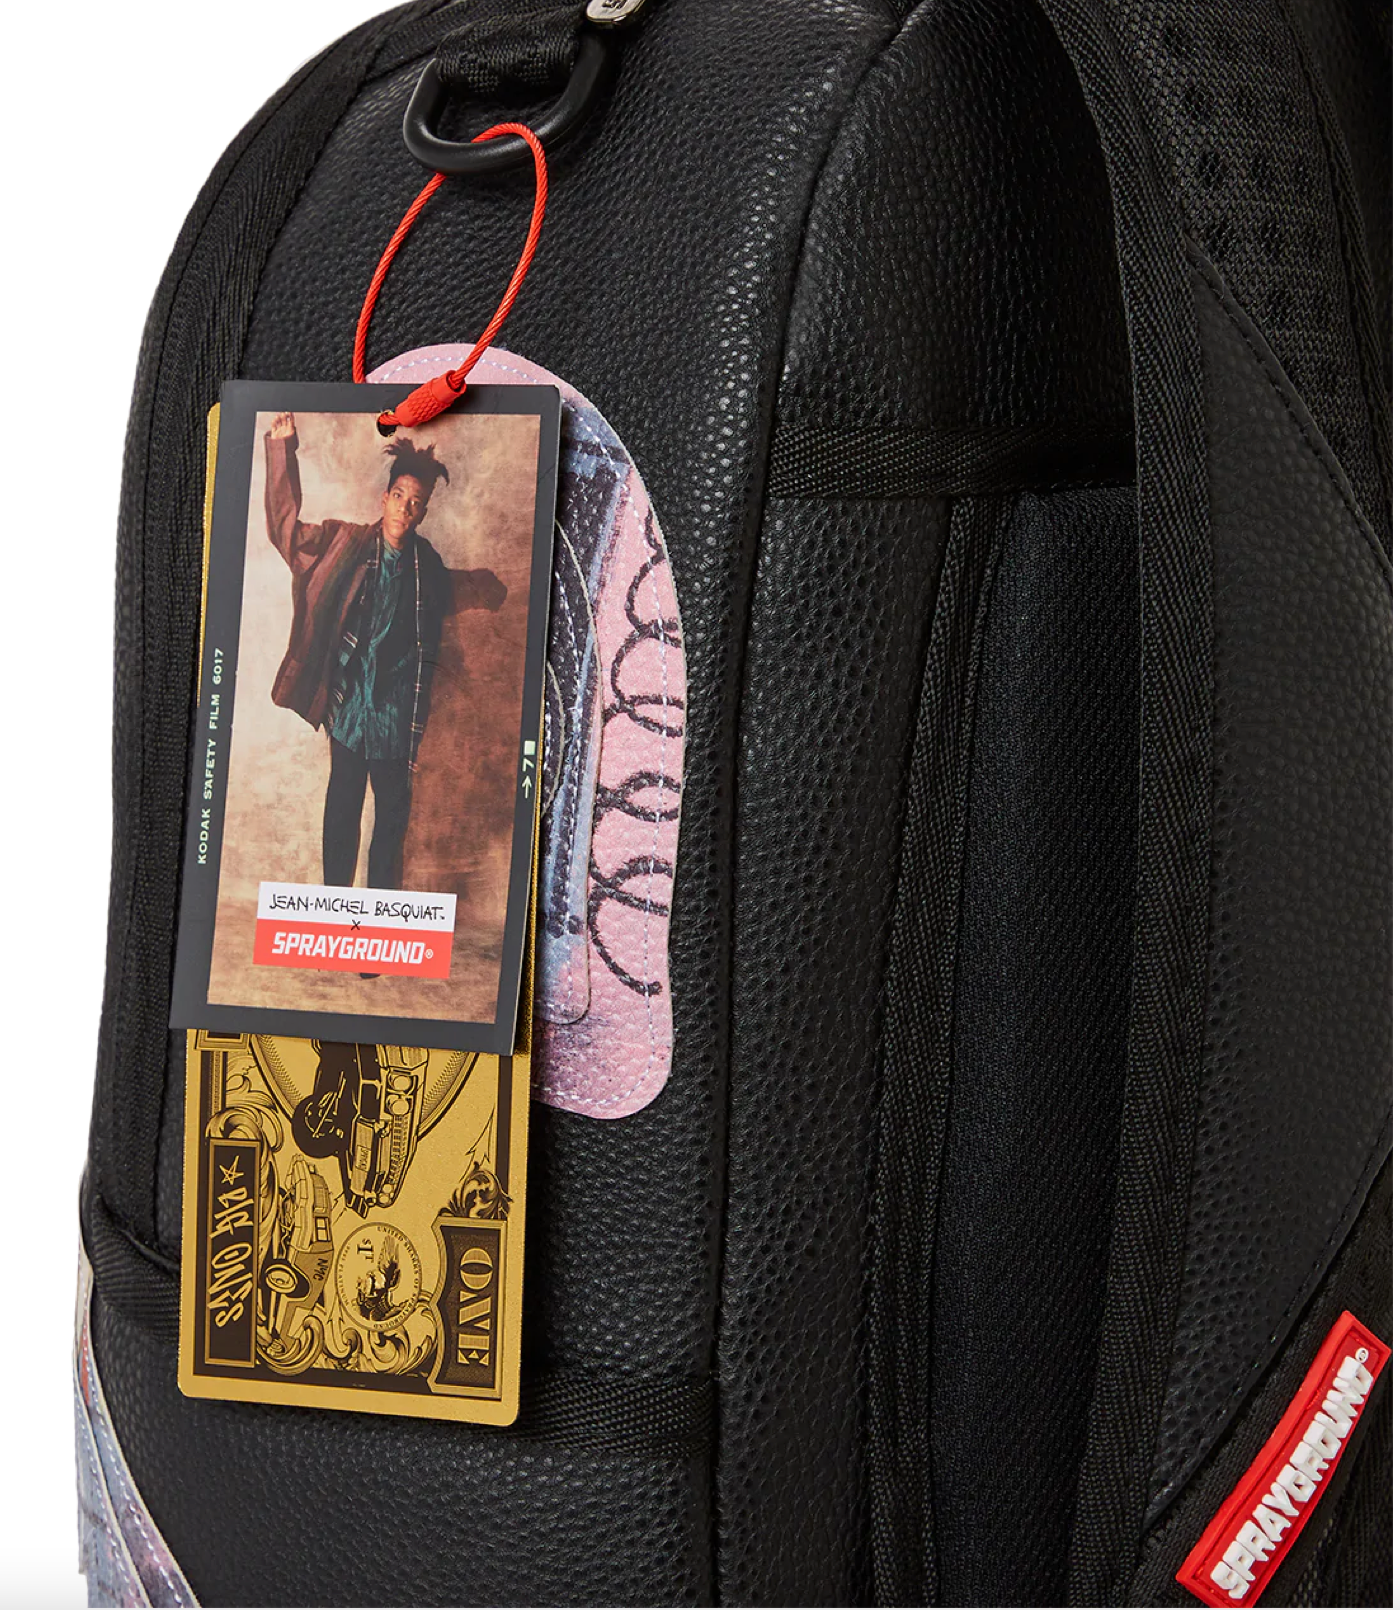 Sprayground  | Official Basquiat Untitled 1982 backpack